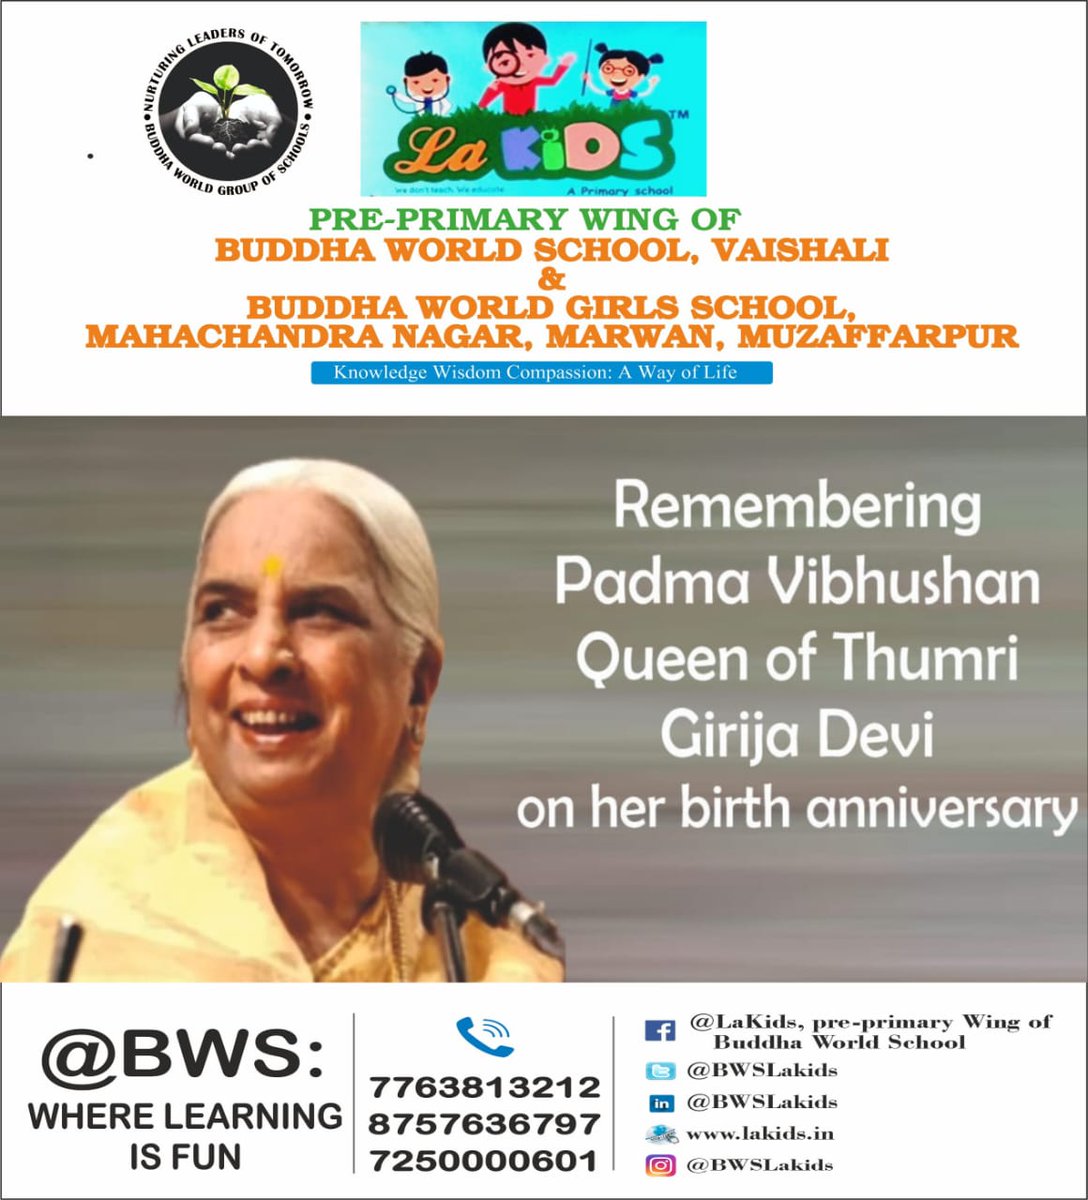 Remembering Padma Vibhushan Queen of Thumri Girija Devi on her birth anniversary. #girijadevi #girija  #thumri #birth #anniversary #bws #wherelearningisfun @sarikamalhotra2 @Krish_Vaishali